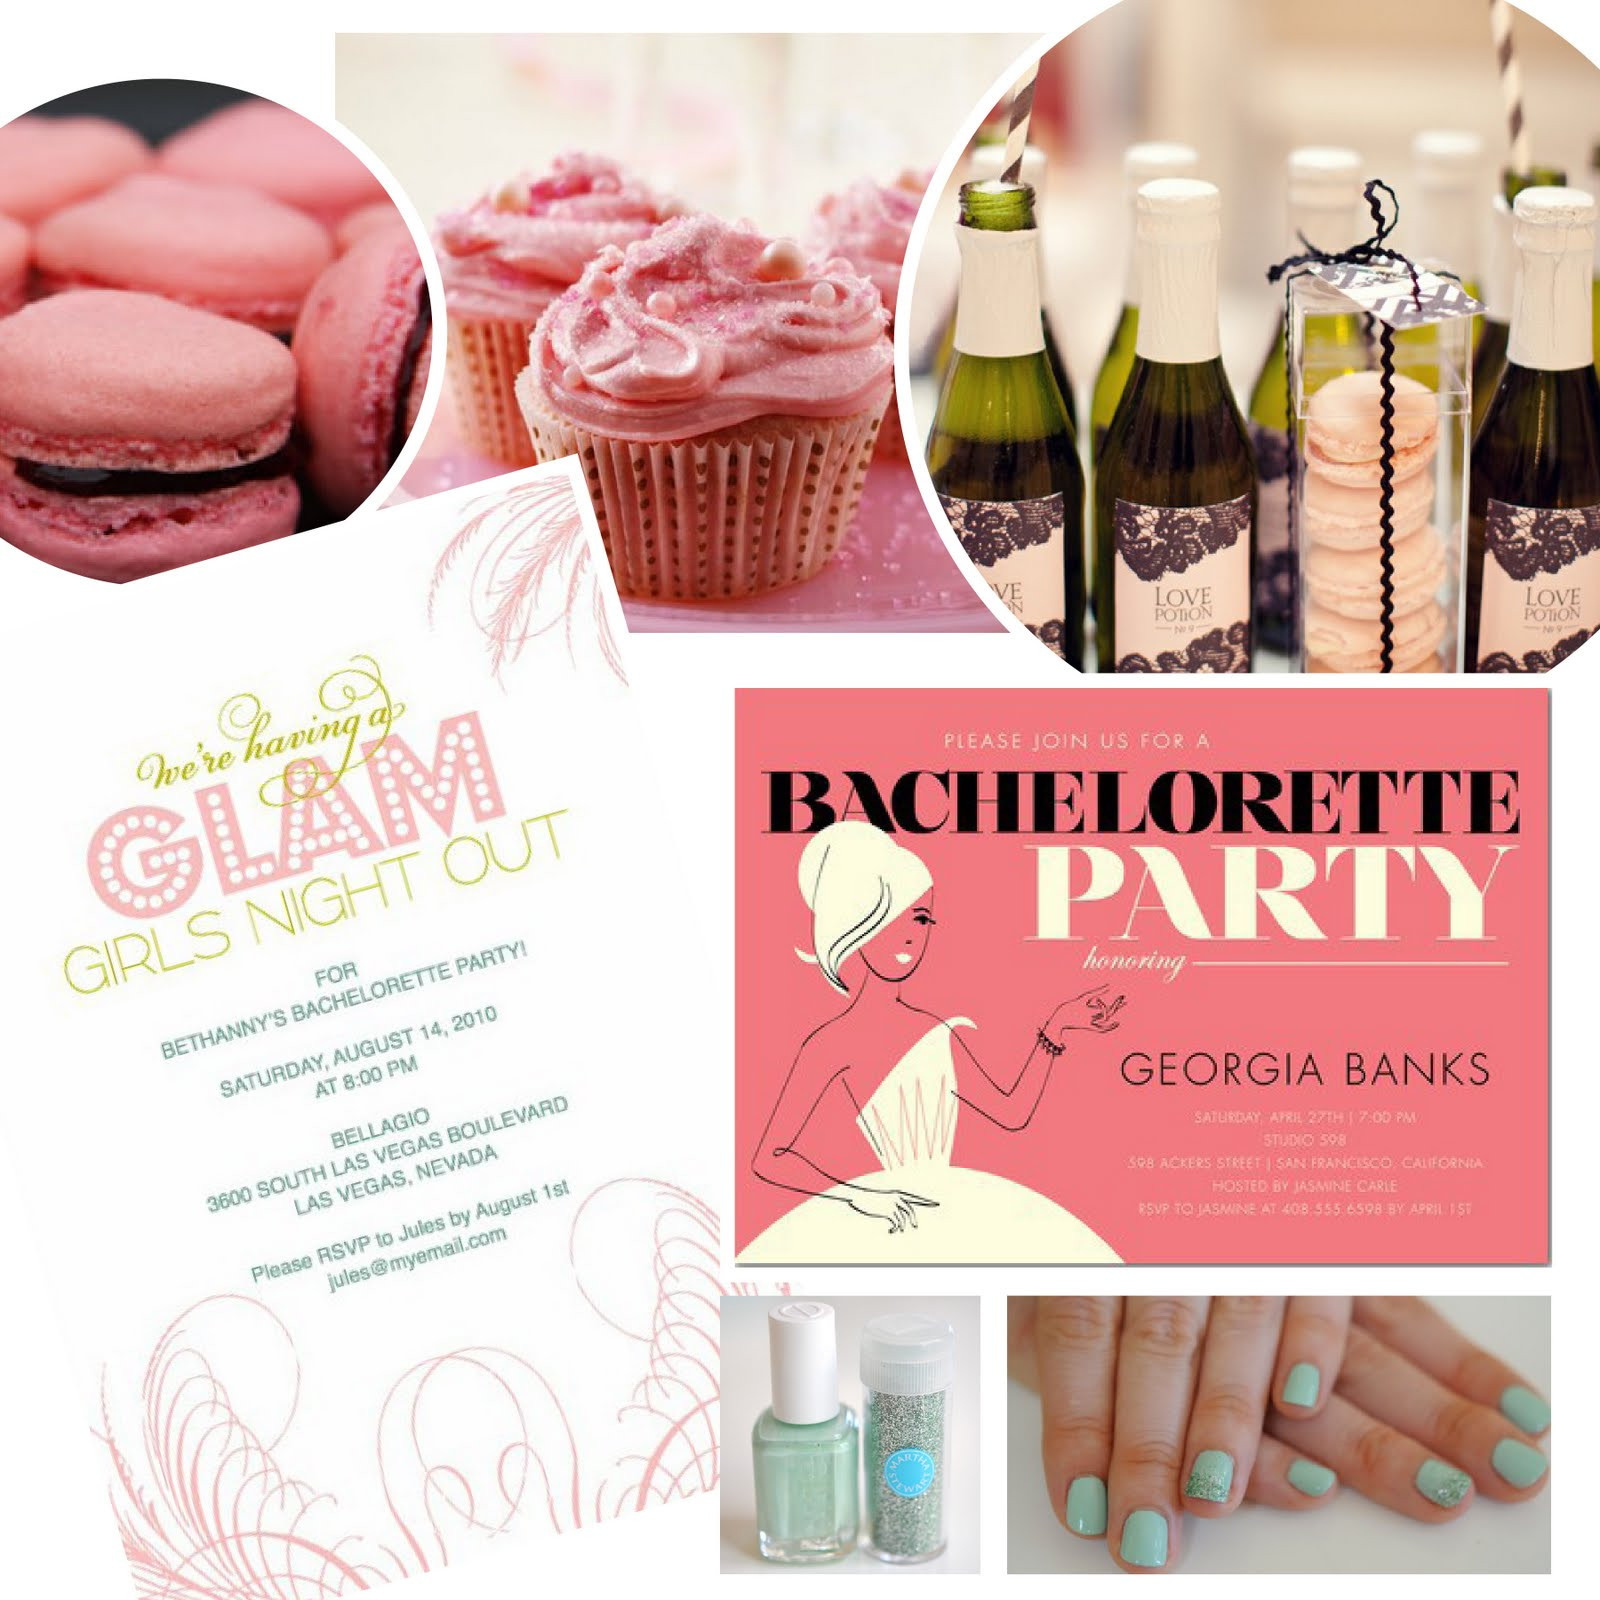 Bachelorette Viewing Party Ideas
 Wedding Blog I m a Mrs Wedding Blog